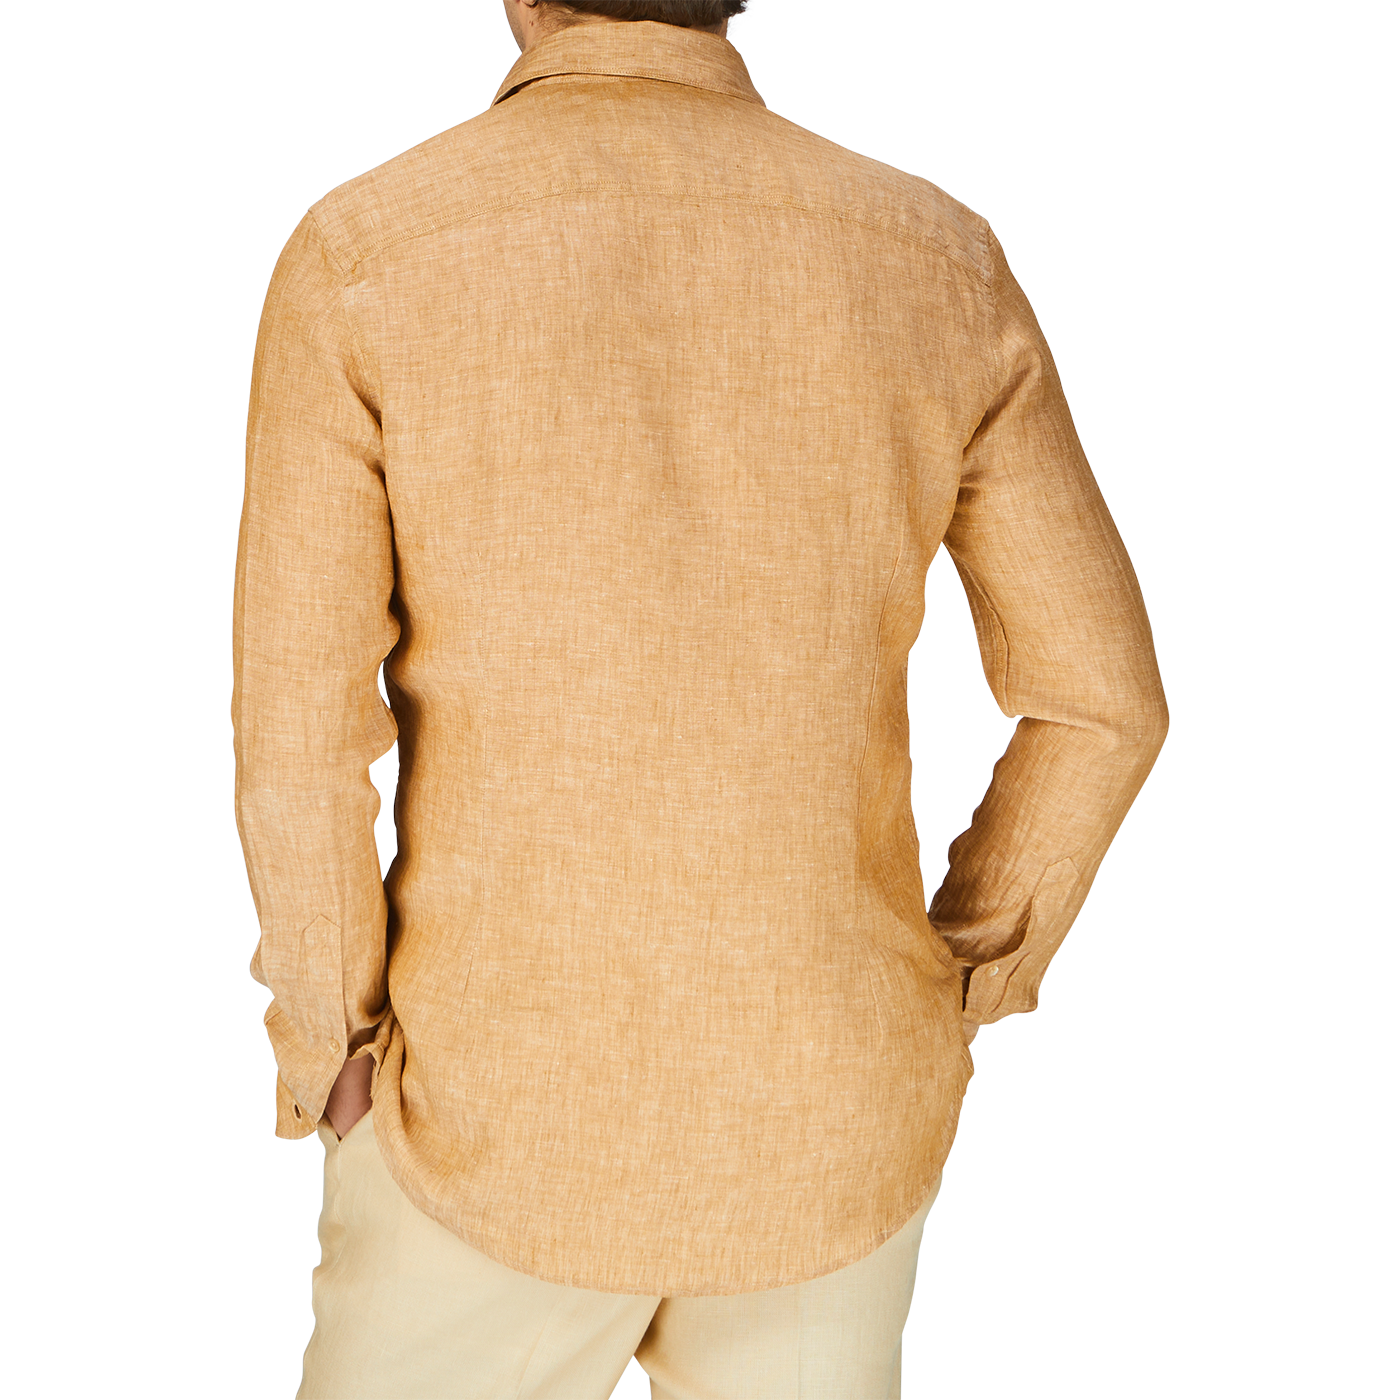 A man in a Tobacco Brown Linen Slimline Shirt by Stenströms, seen from behind.